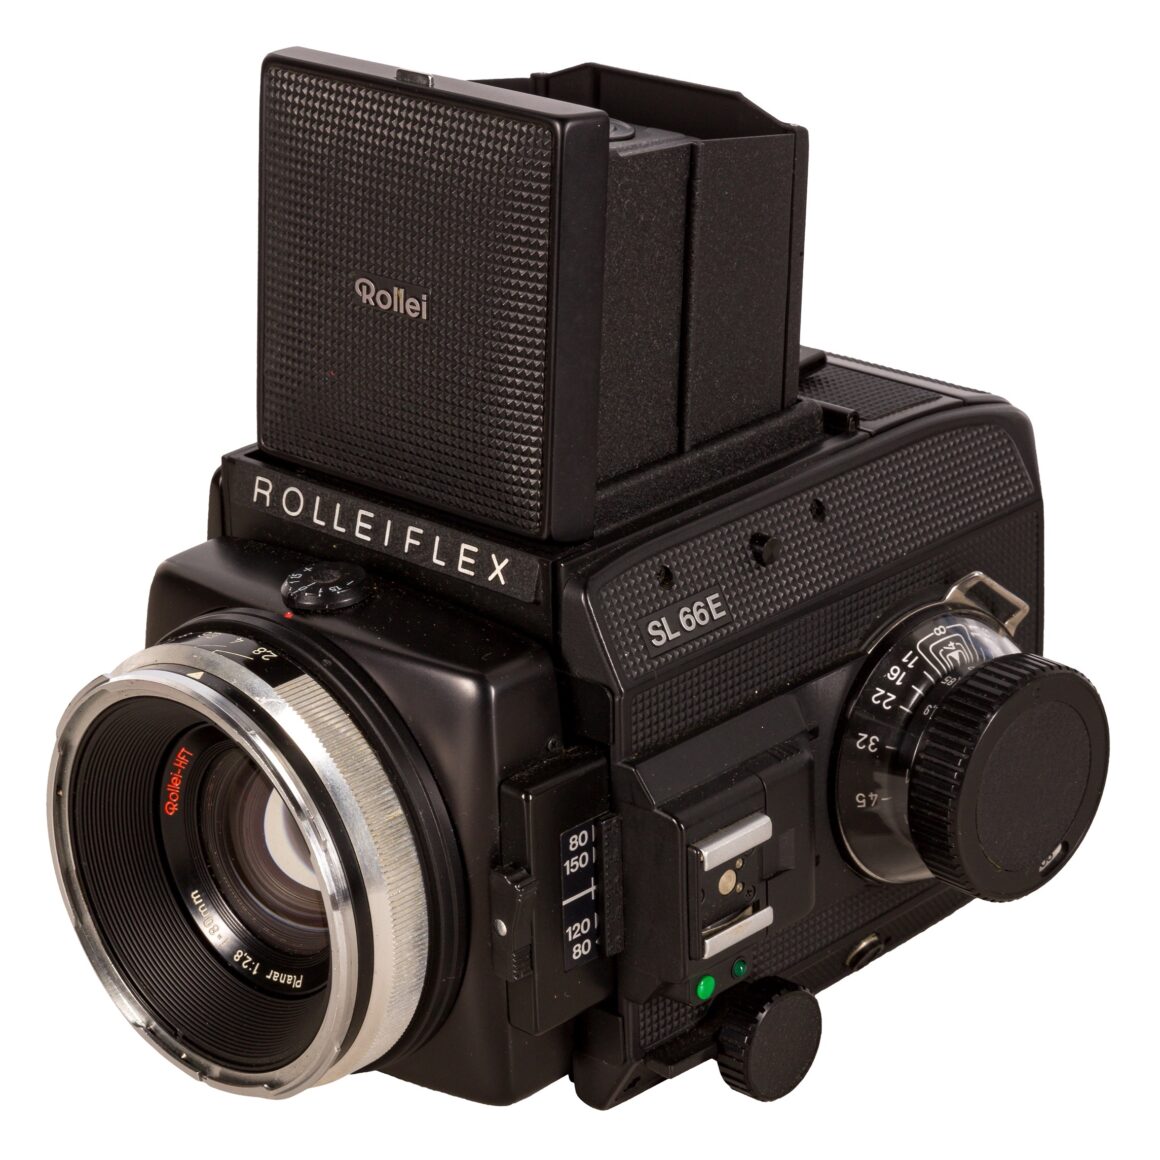 Rolleiflex SL66E